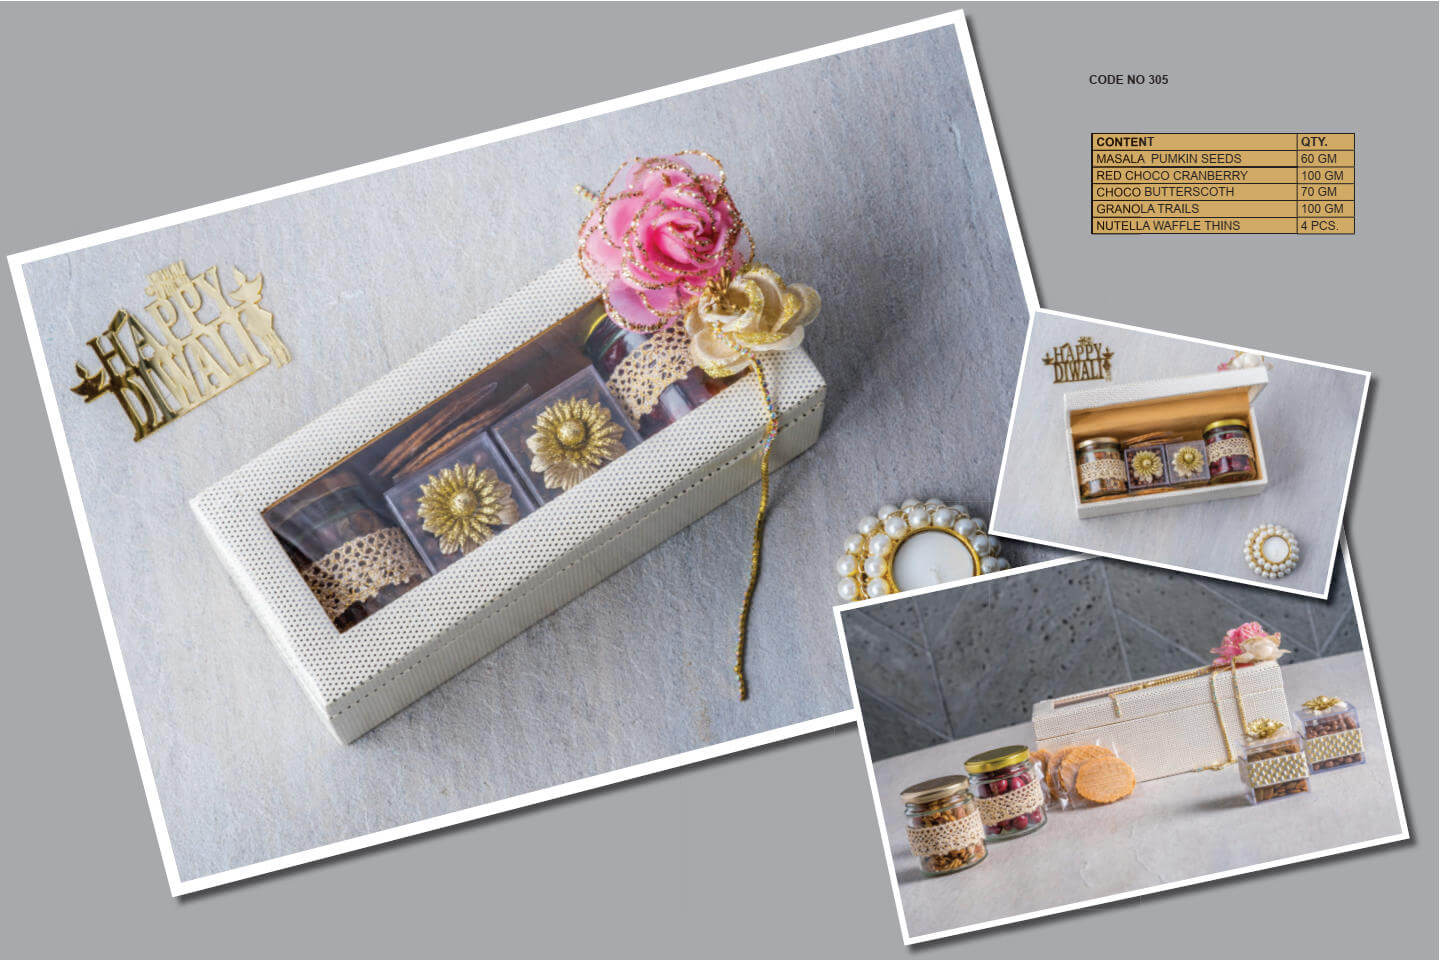 Diwali Gift Box CODE NO 305